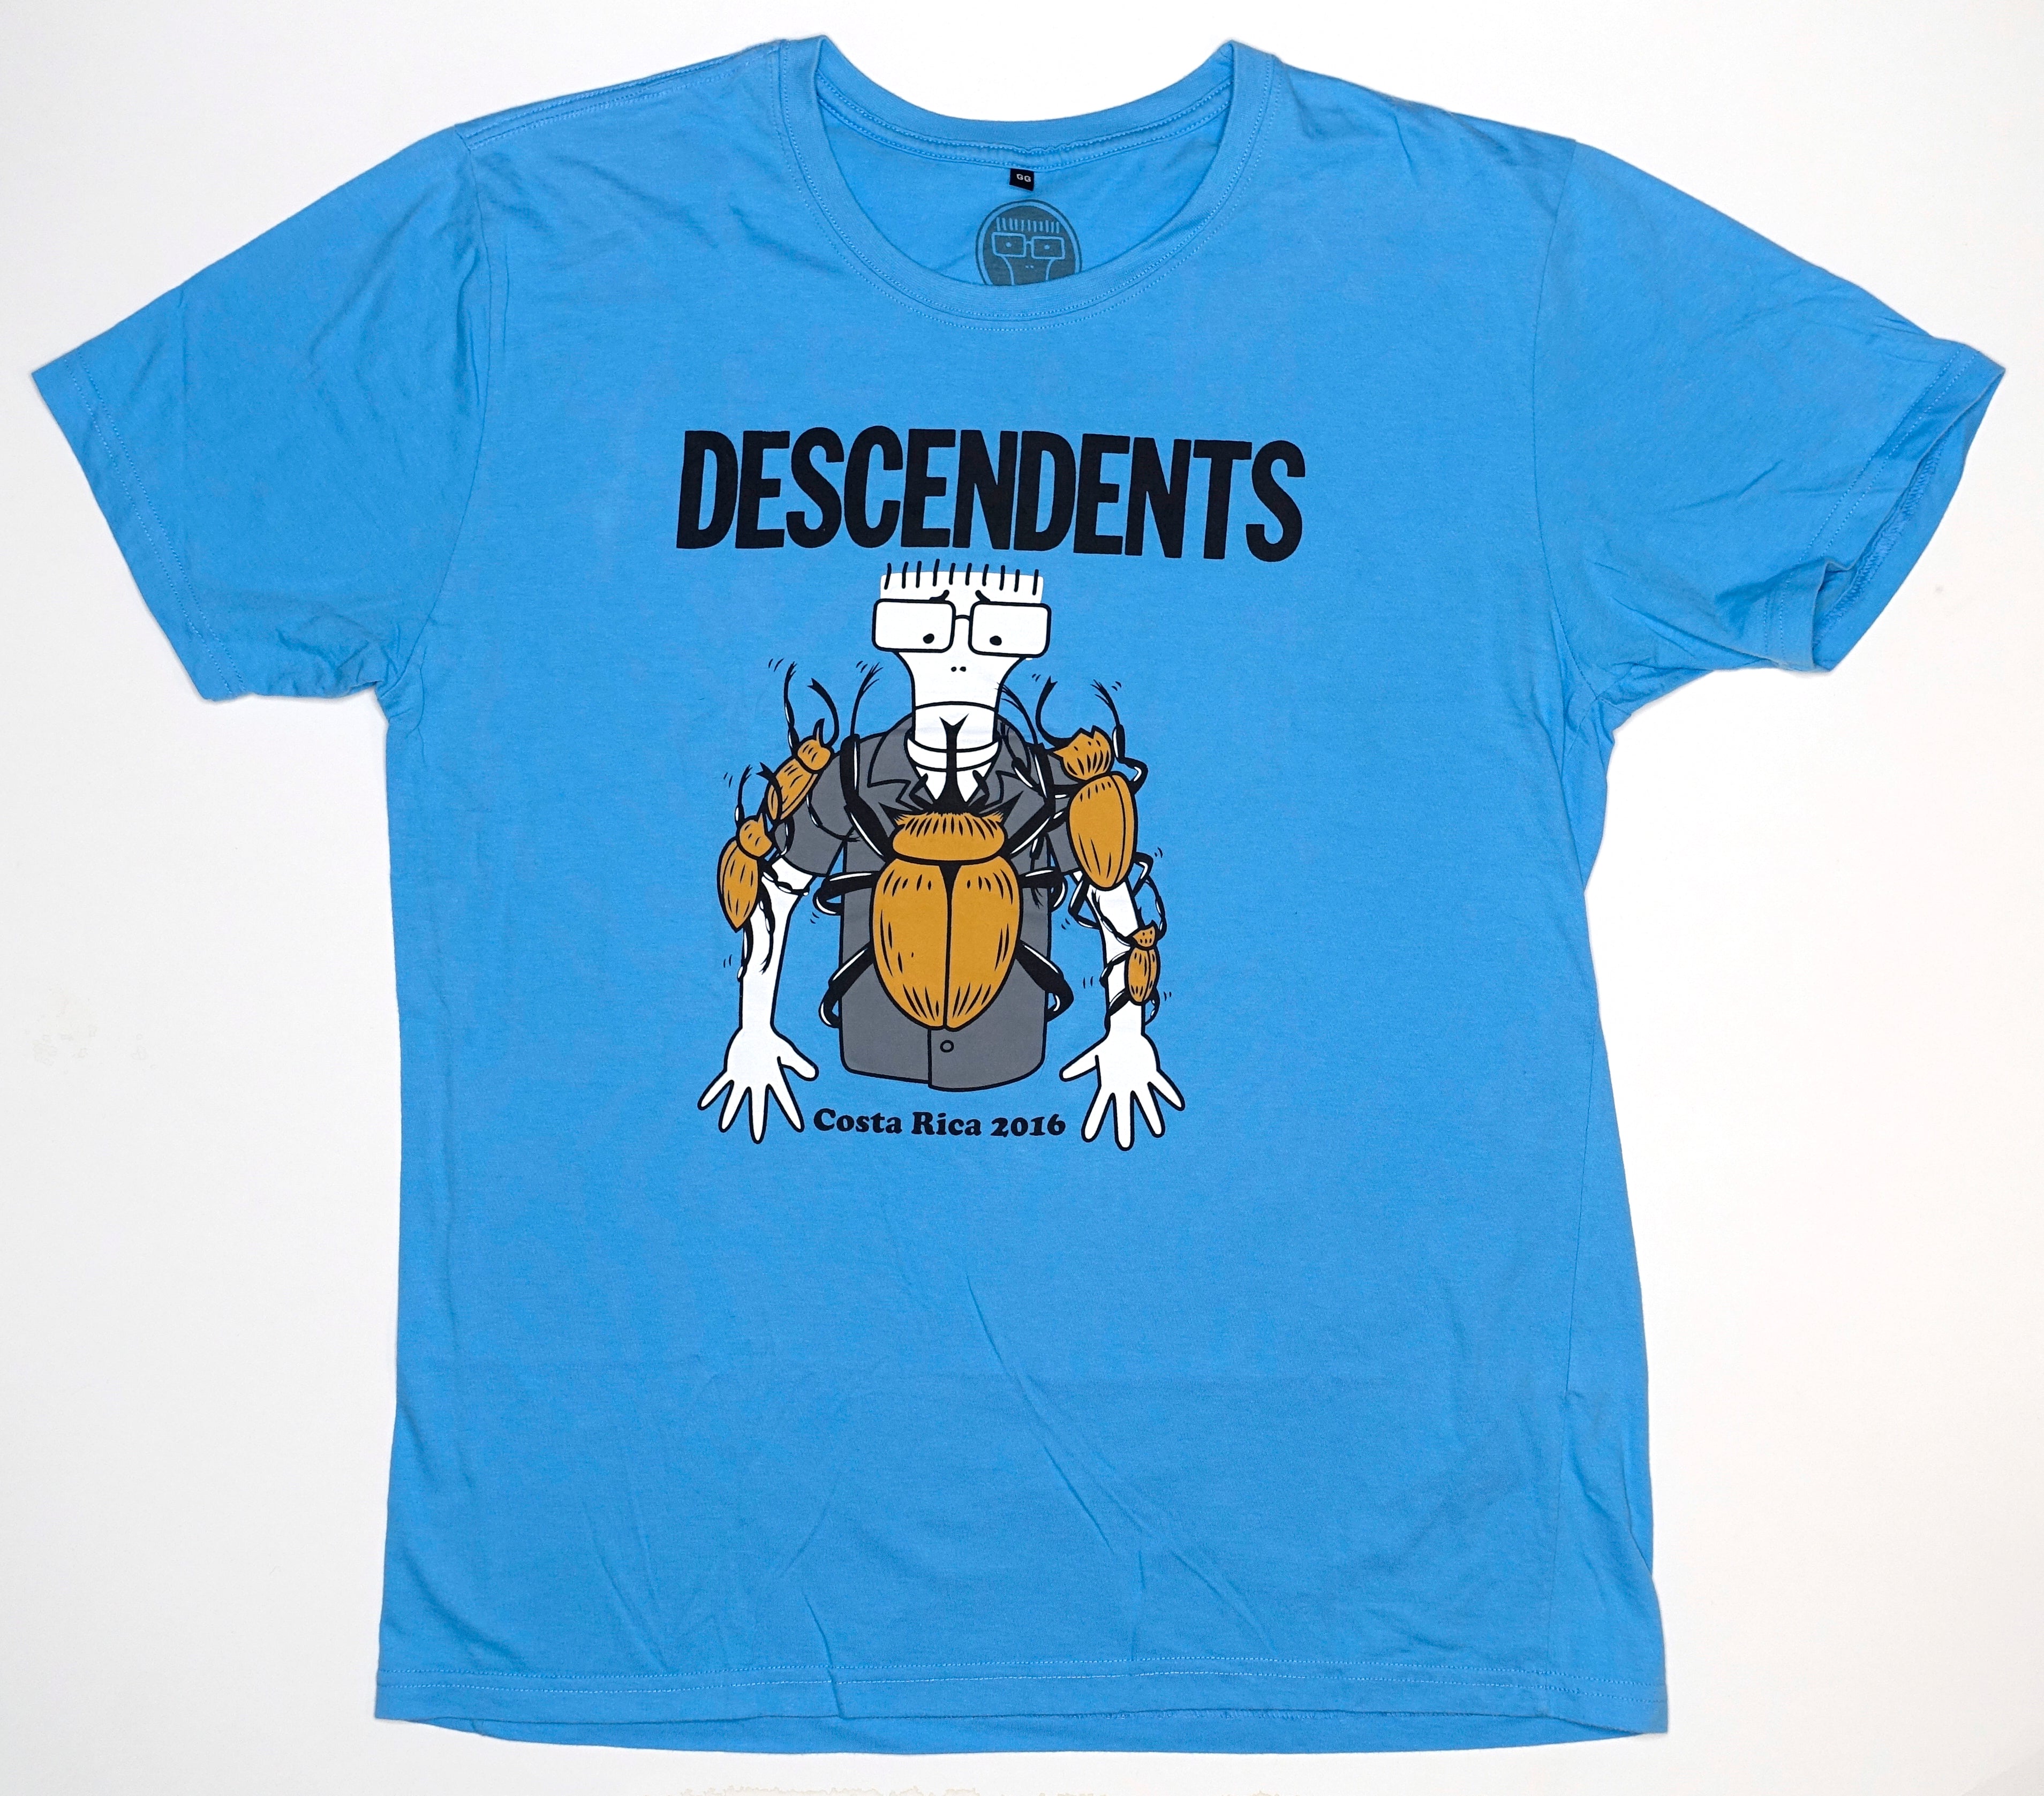 Descendents - Costa Rica 2016 Tour Shirt Size XL / Large